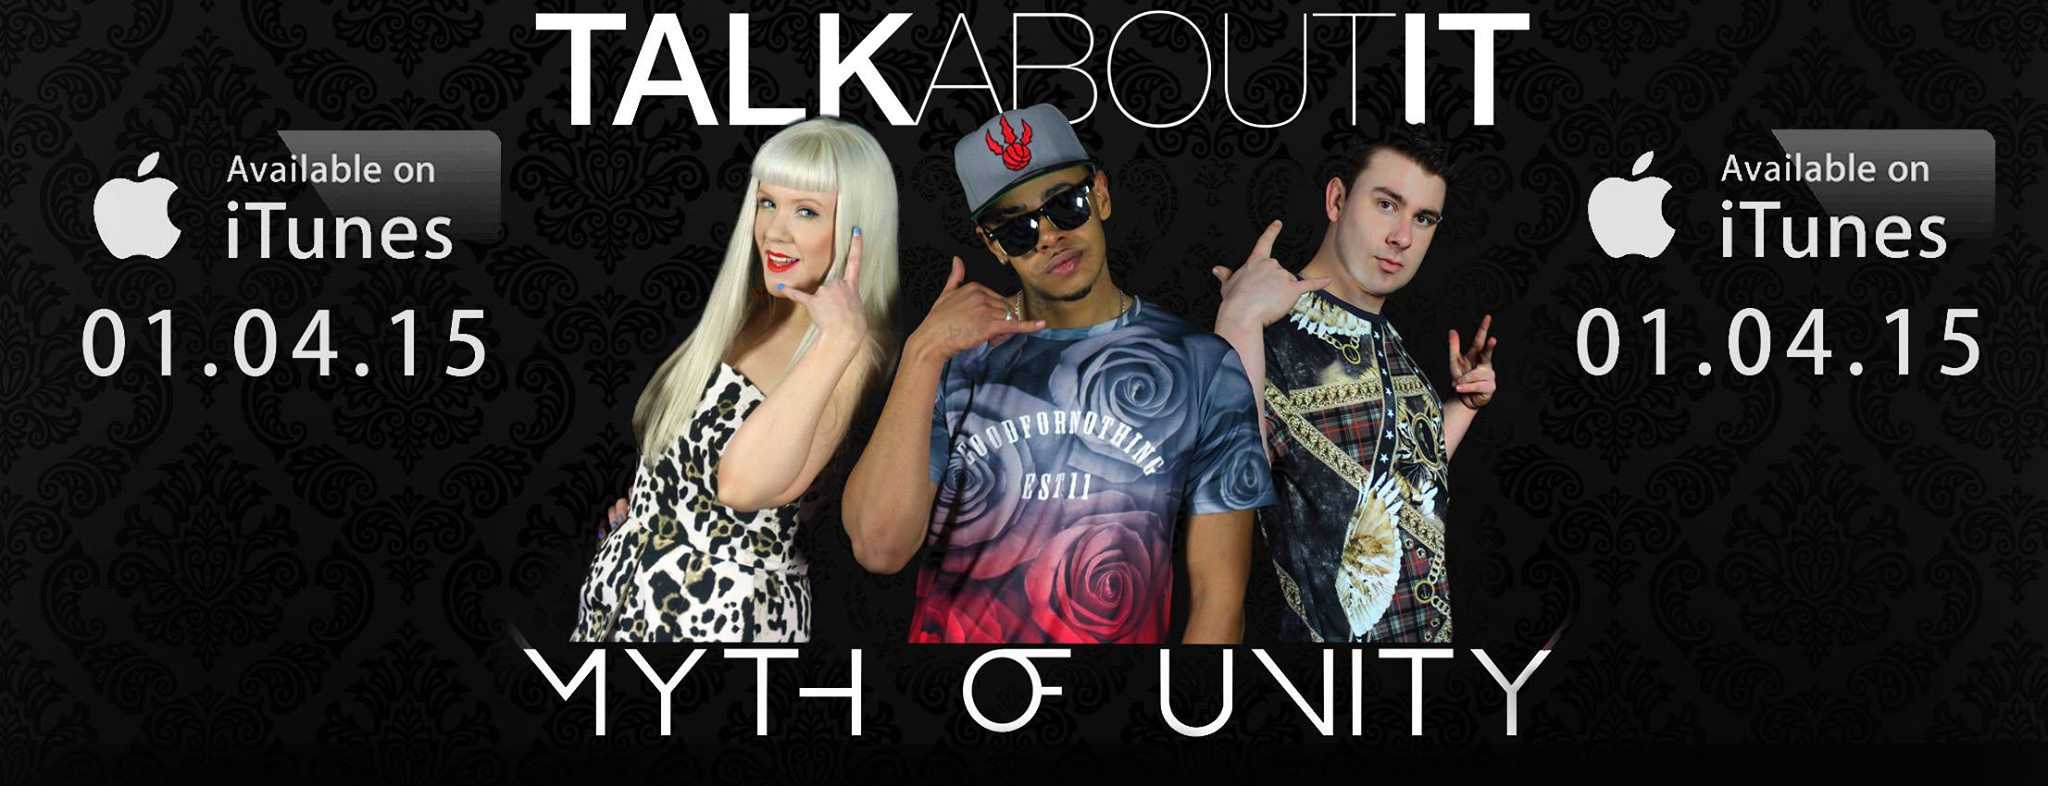 Myth of Unity - Talk About It